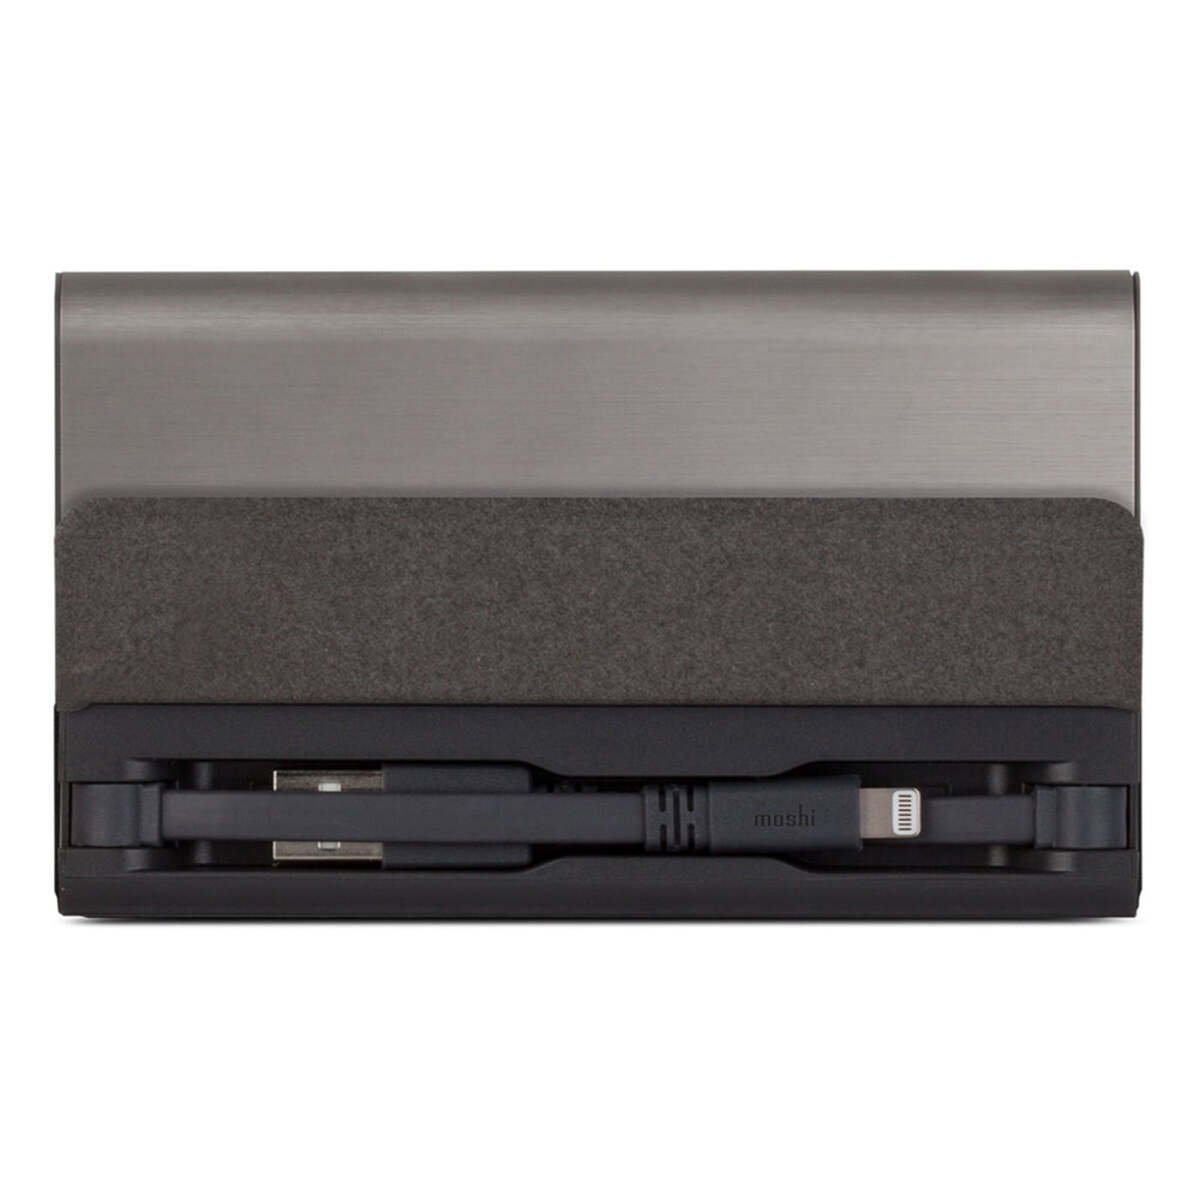 MOSHI IONBANK 10,000 mAh Portable Battery- Gunmetal Gray